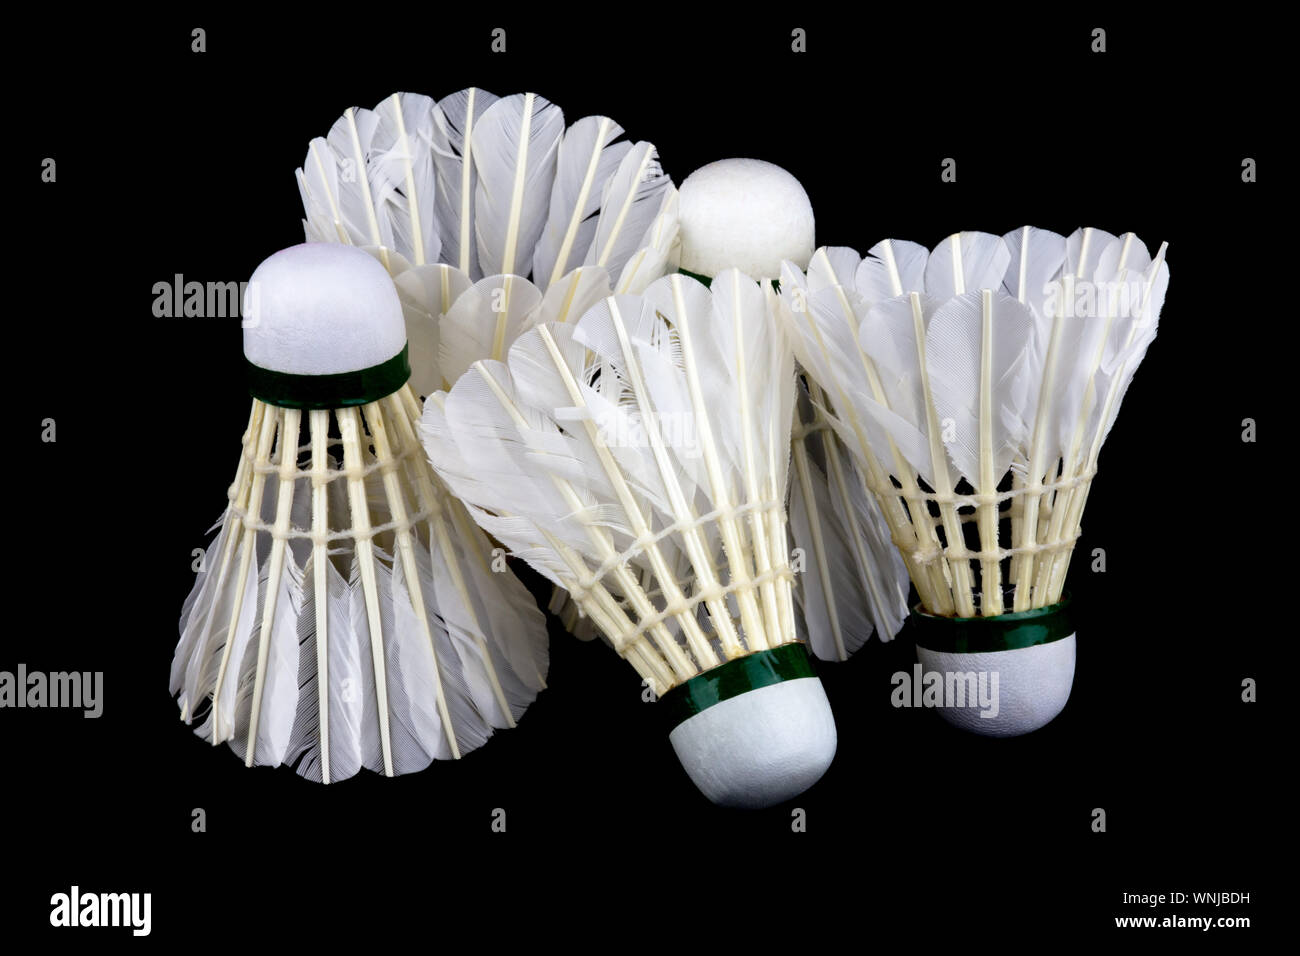 Badminton Shuttlecocks isolated against a black background Stock Photo